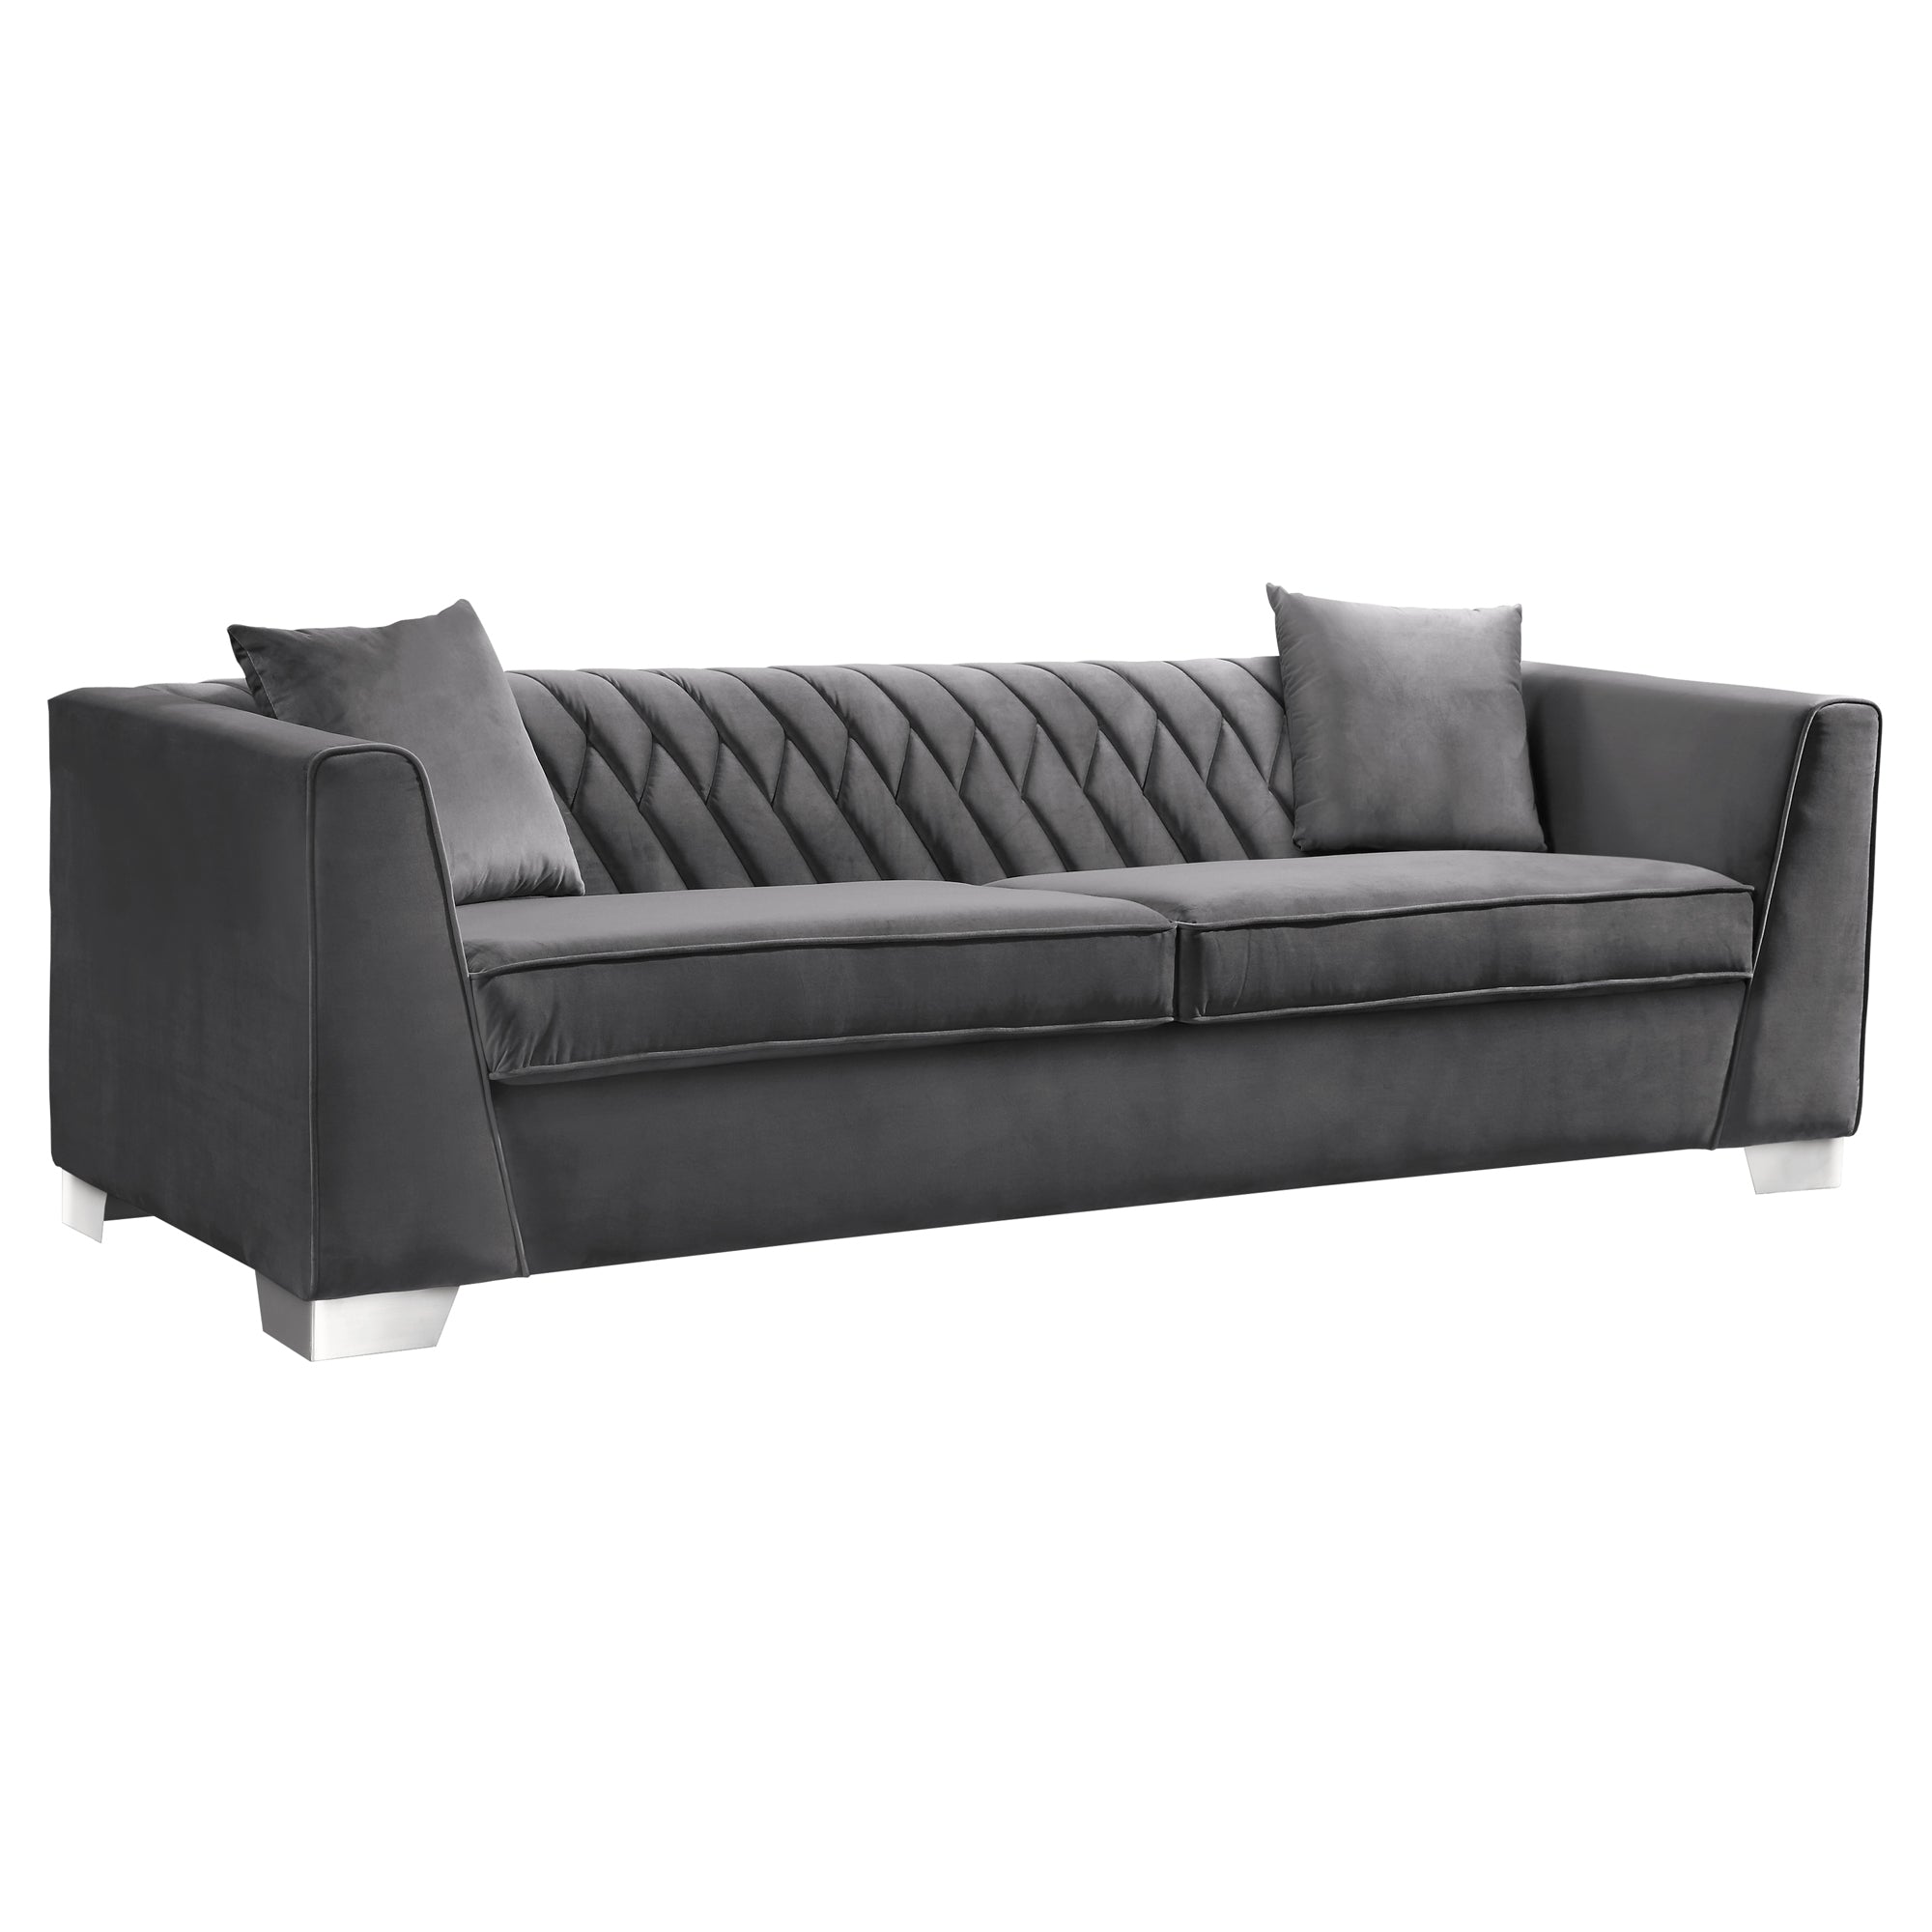 Armen Living Lccm3gr Cambridge Contemporary Sofa In Brushed Stainless Steel And Dark Grey Velvet